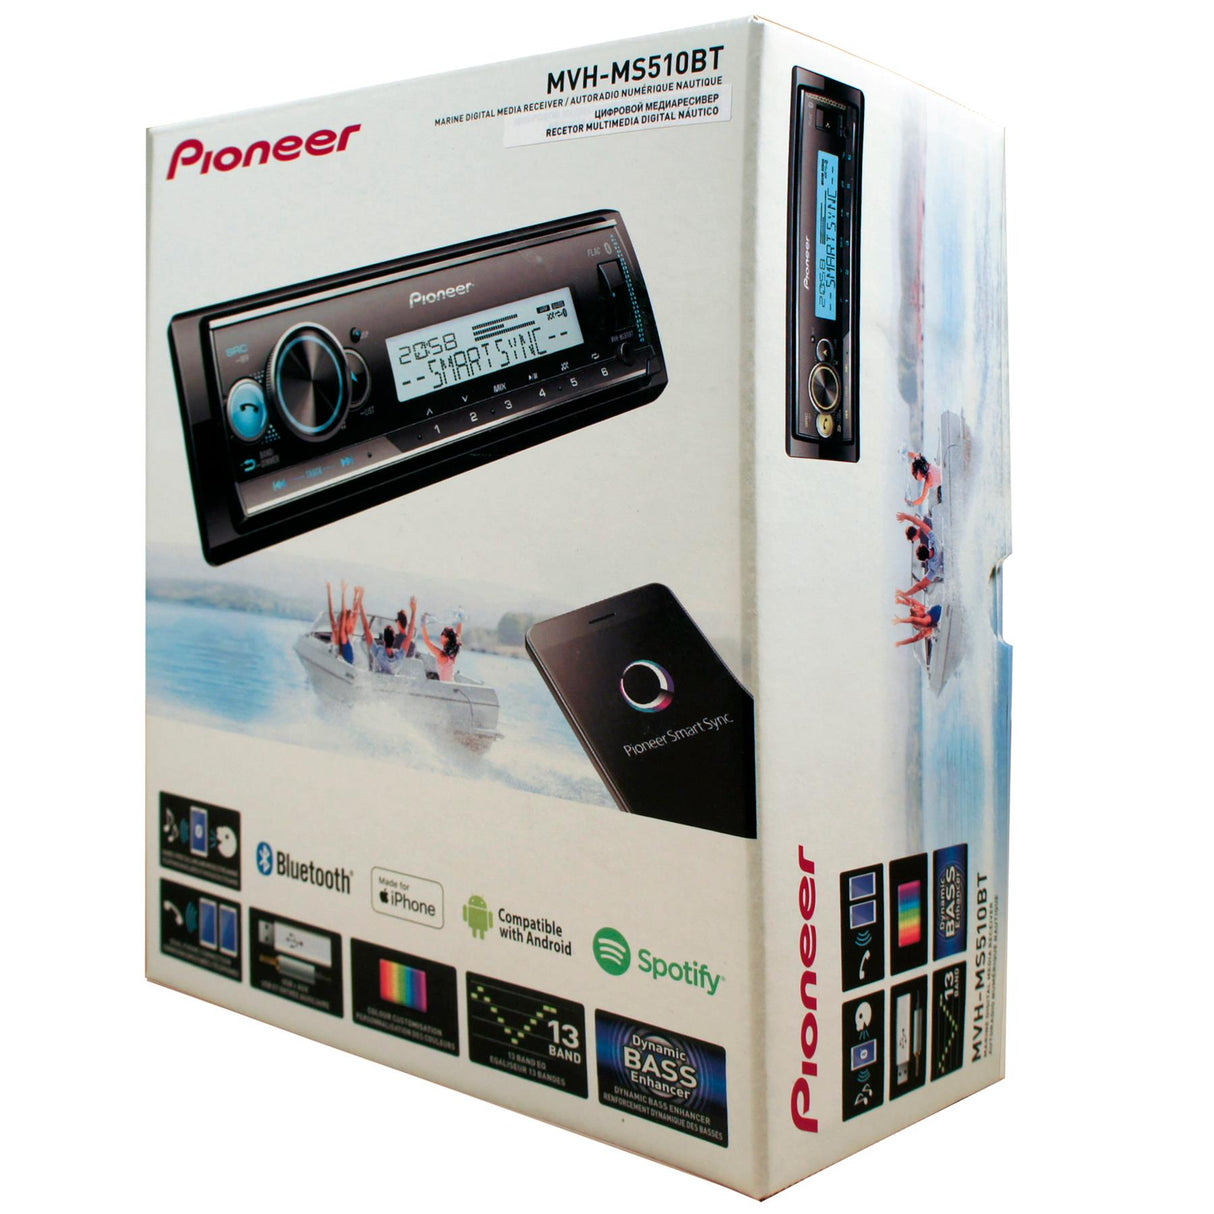 Pioneer MVH-MS510BT Marine Radio Digital Media Receiver 1-DIN Bluetooth USB Spotify & MIXTRAX - PROTEUS MARINE STORE